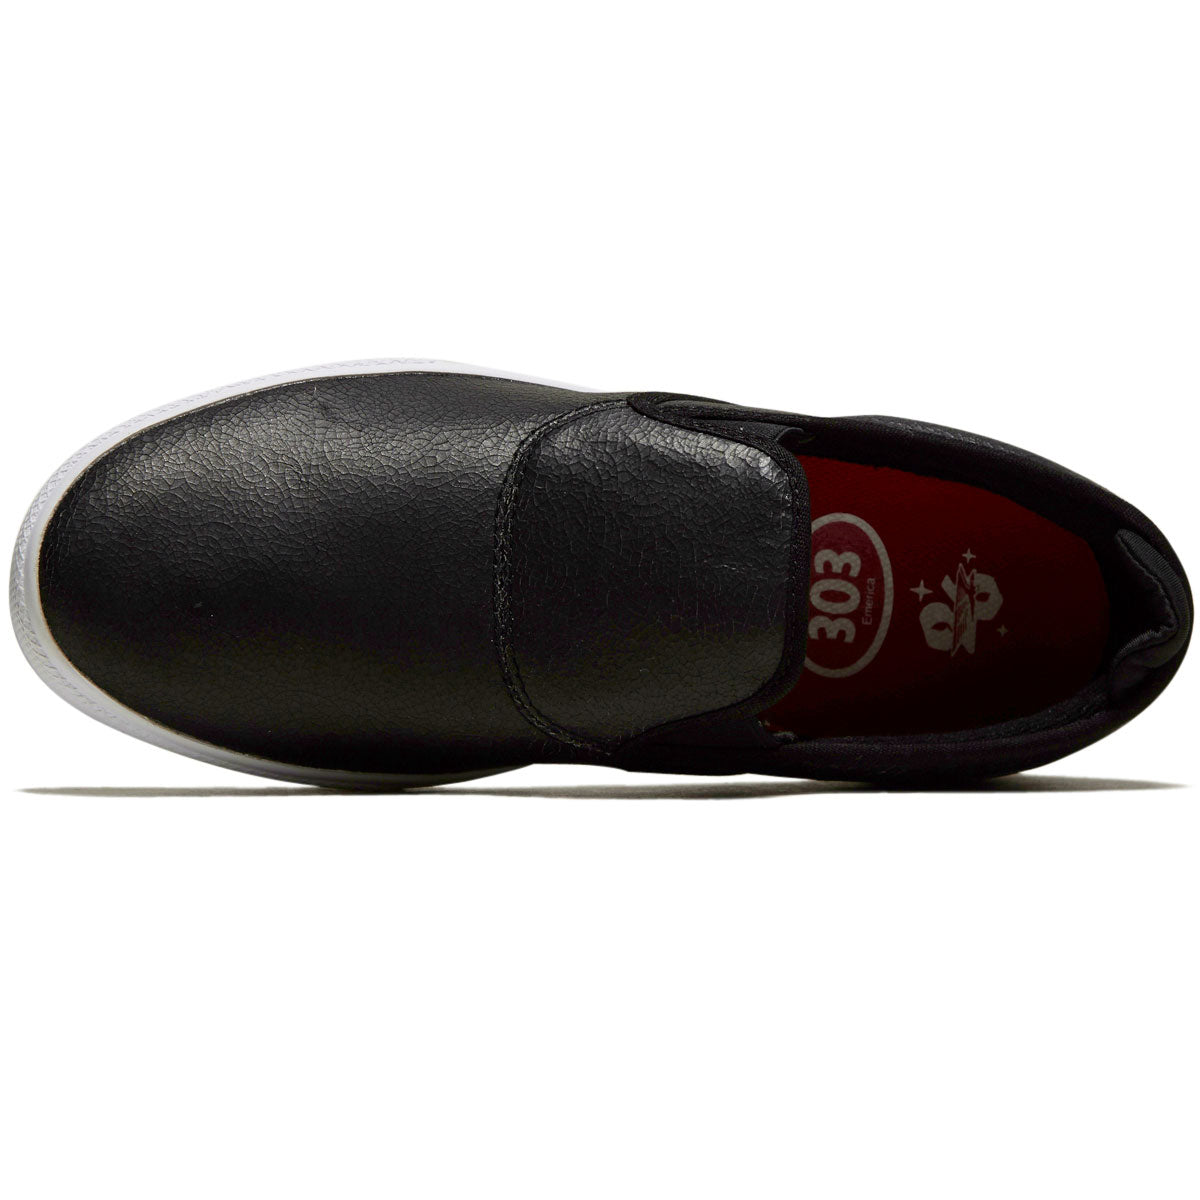 Emerica x 303 Boards Wino G6 Slip Cup Shoes - Black/Grey image 3